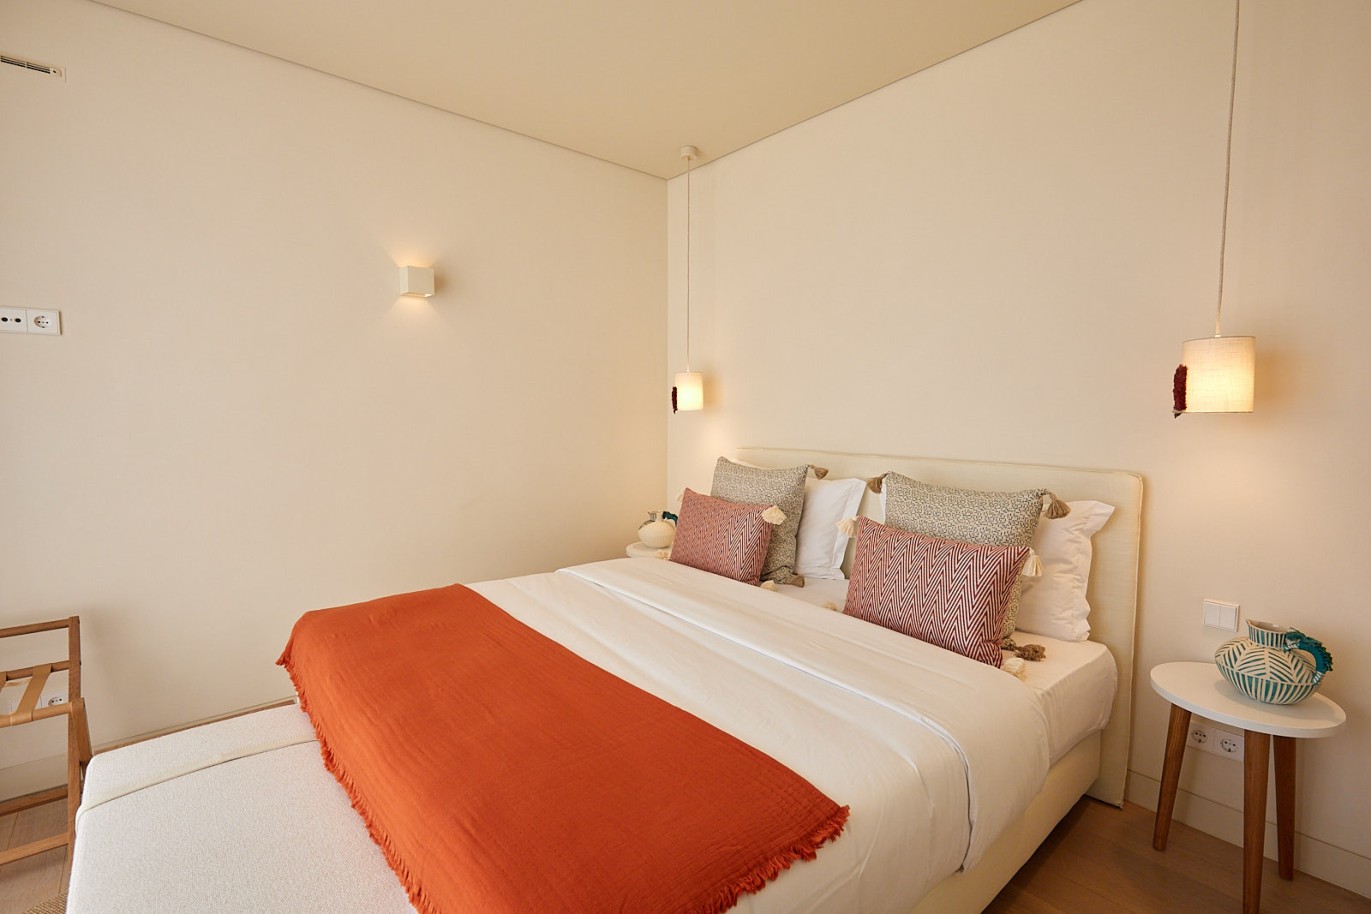 2 bedroom apartment in resort, for sale in Porches, Algarve_229152